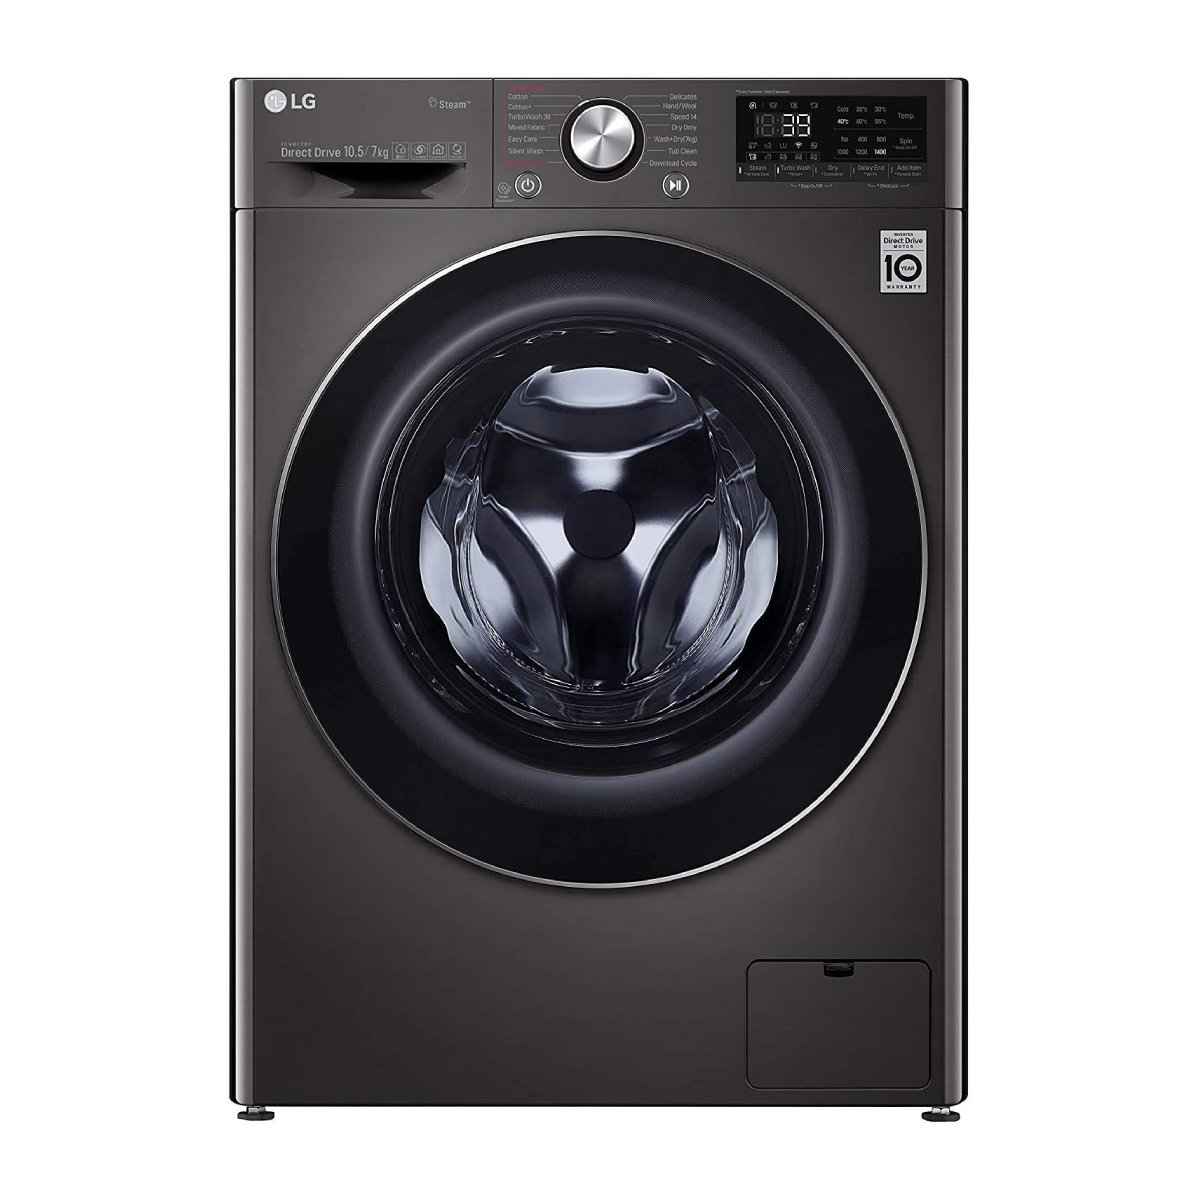 LG 10.5 Kg / 7.0 Kg Inverter Wi-Fi Washer Dryer (FHD1057STB)